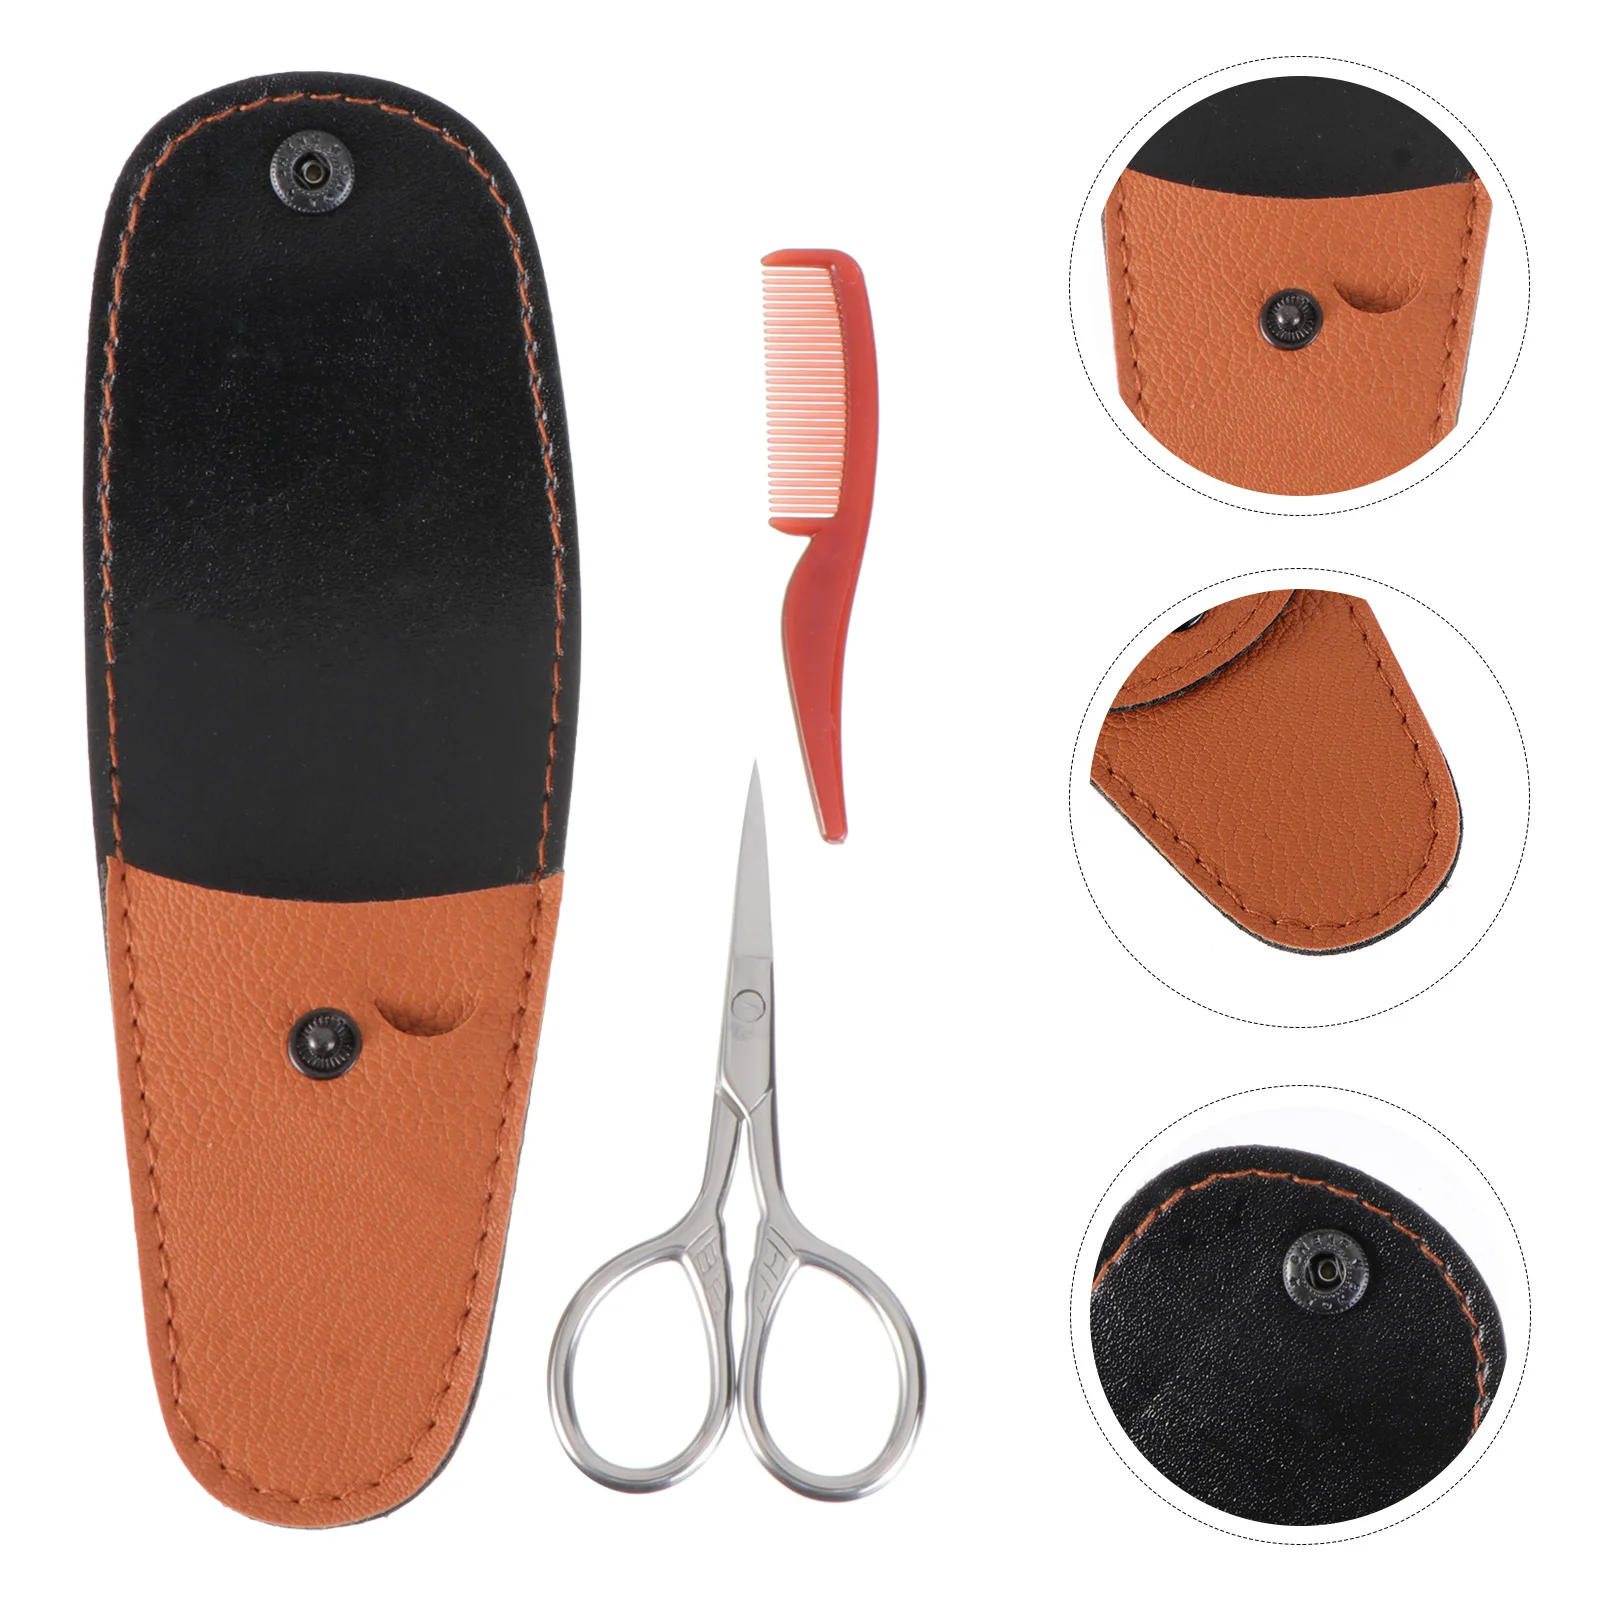 

2 Pcs Beard Shears Beauty Scissors Mustache Trimming Grooming Clippers Tool Kit